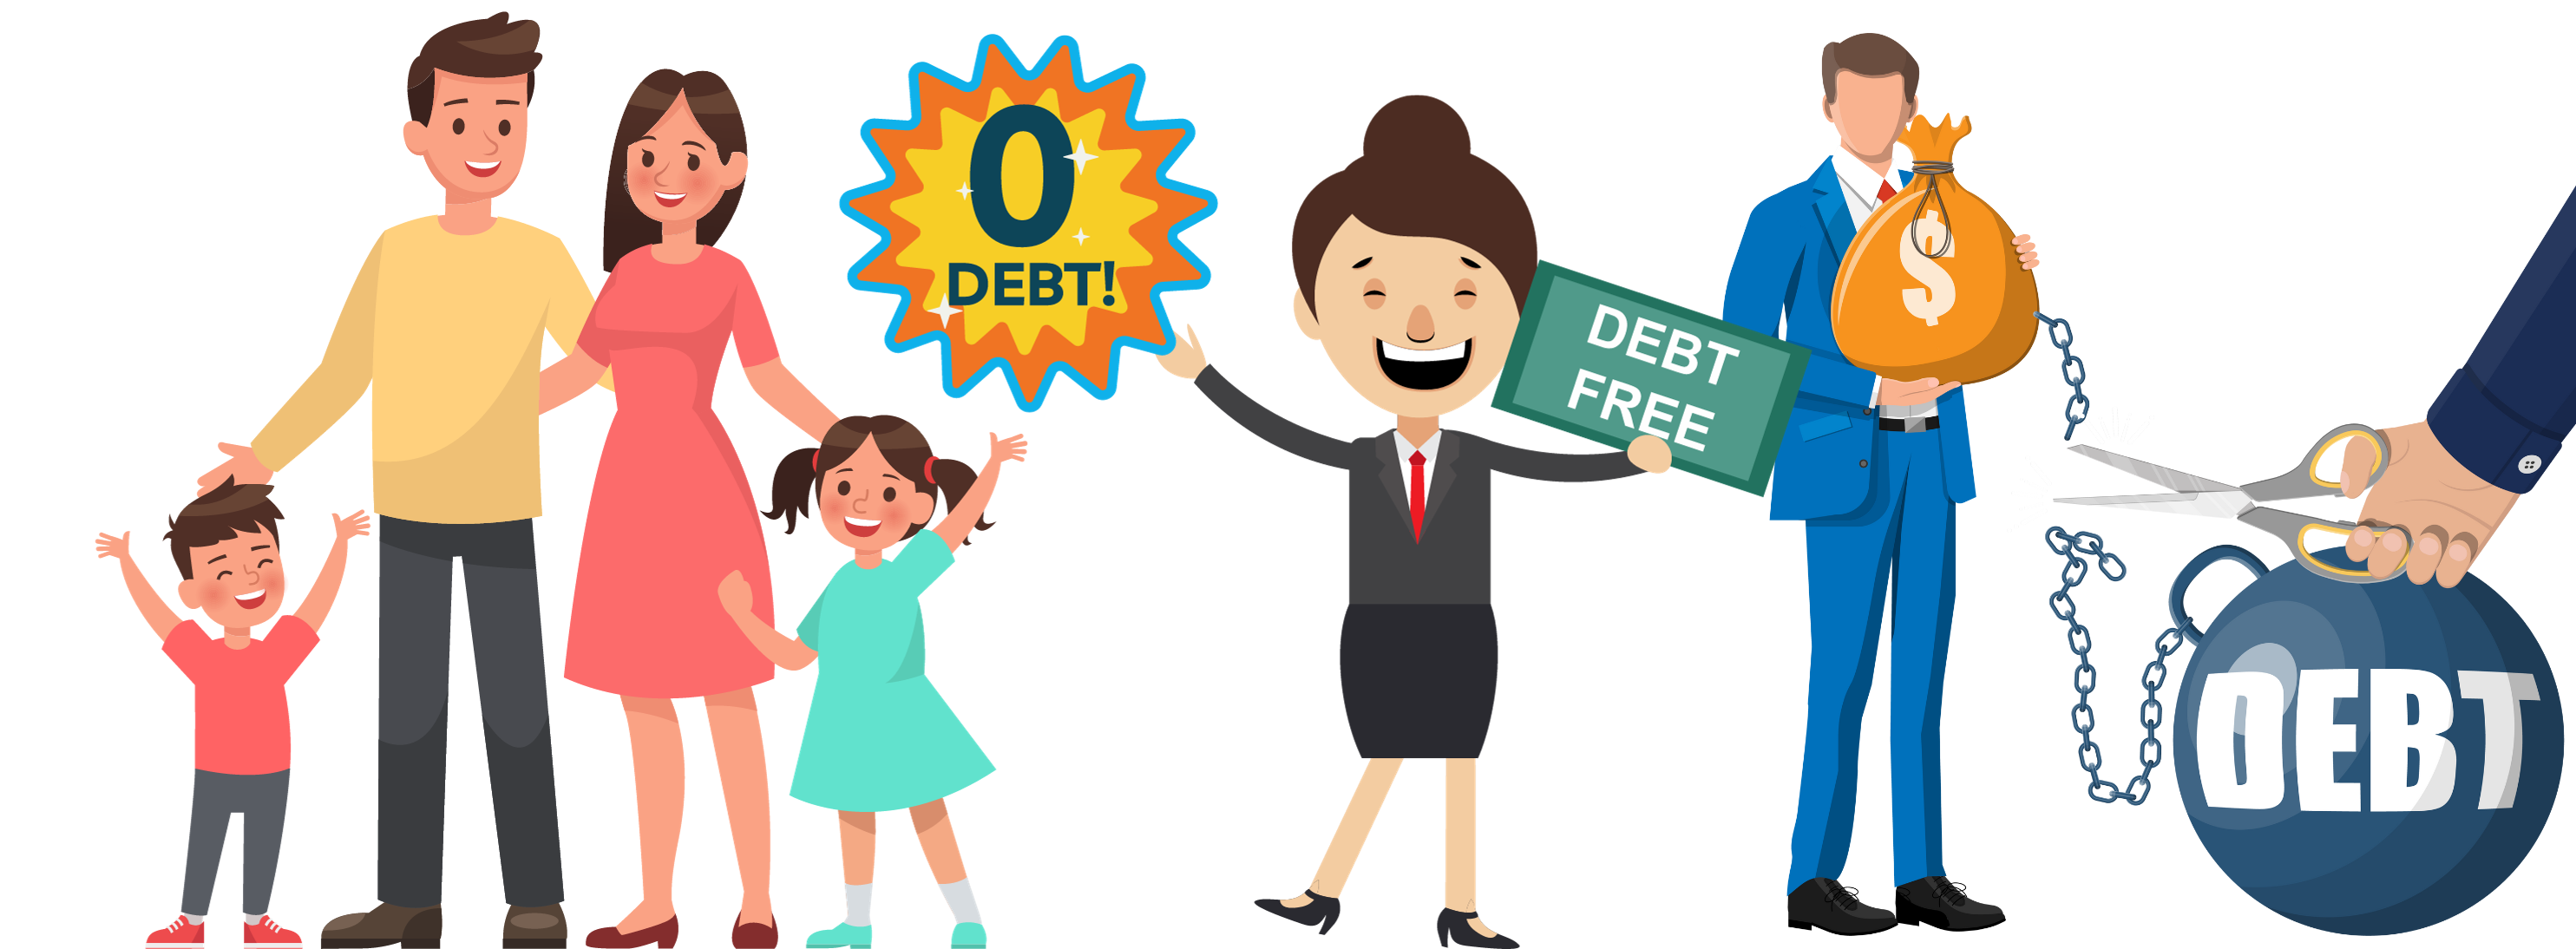  How to Live a Debt Free Life